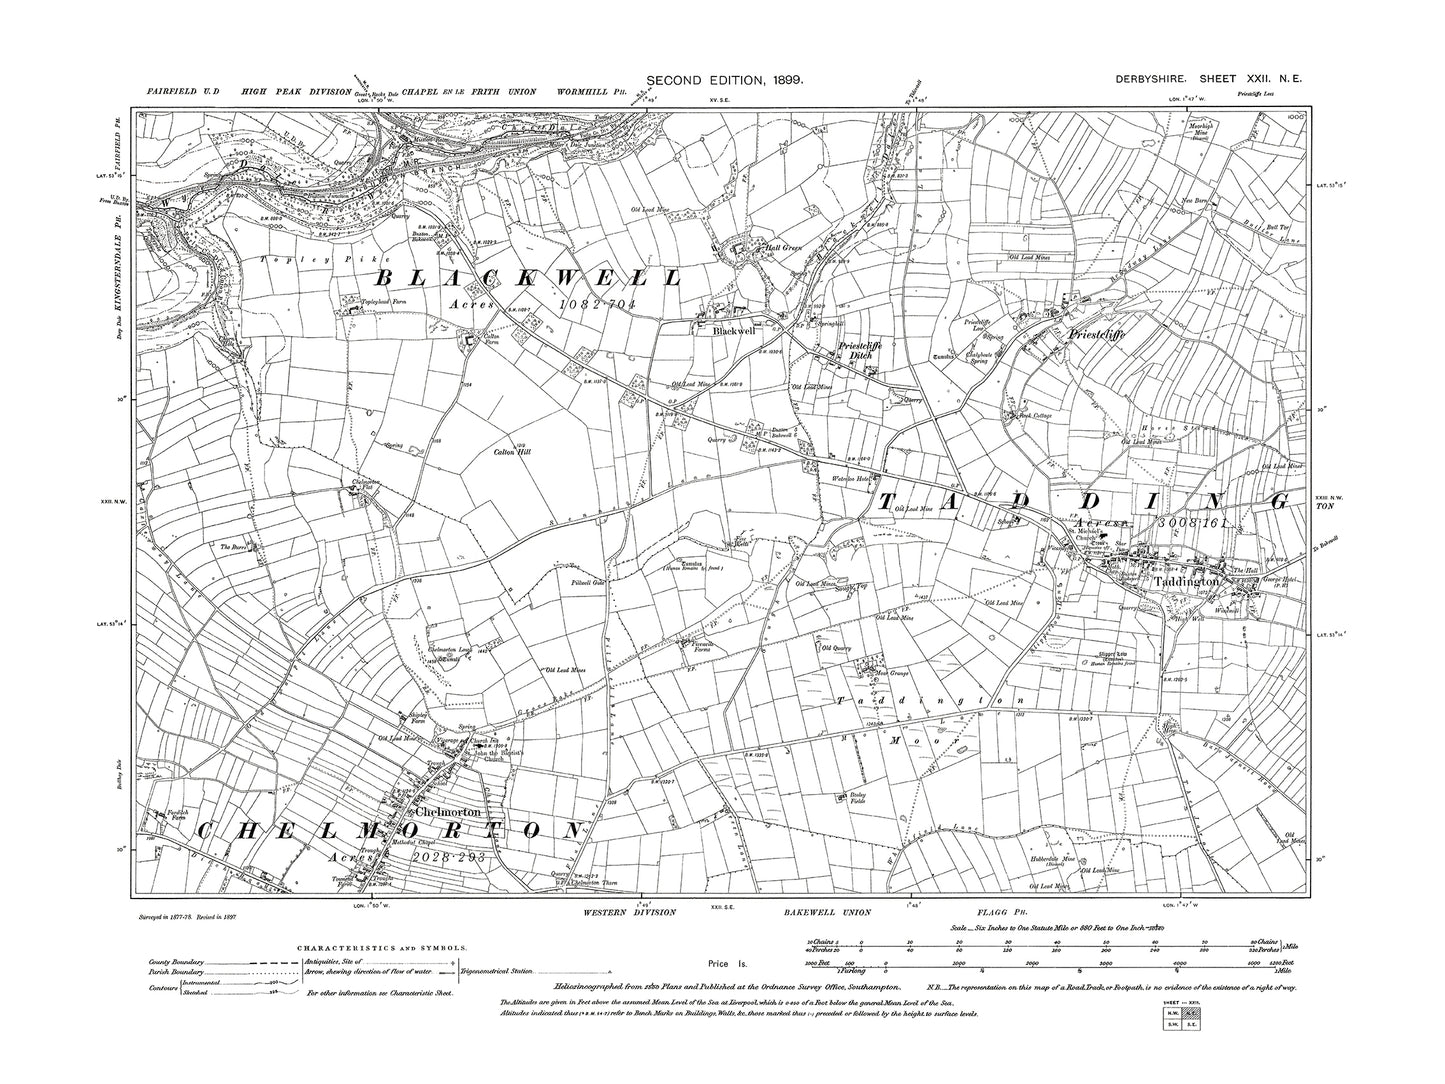 Old OS map dated 1899, showing Taddington, Chelmorton, Priestcliffe in Derbyshire 22NE